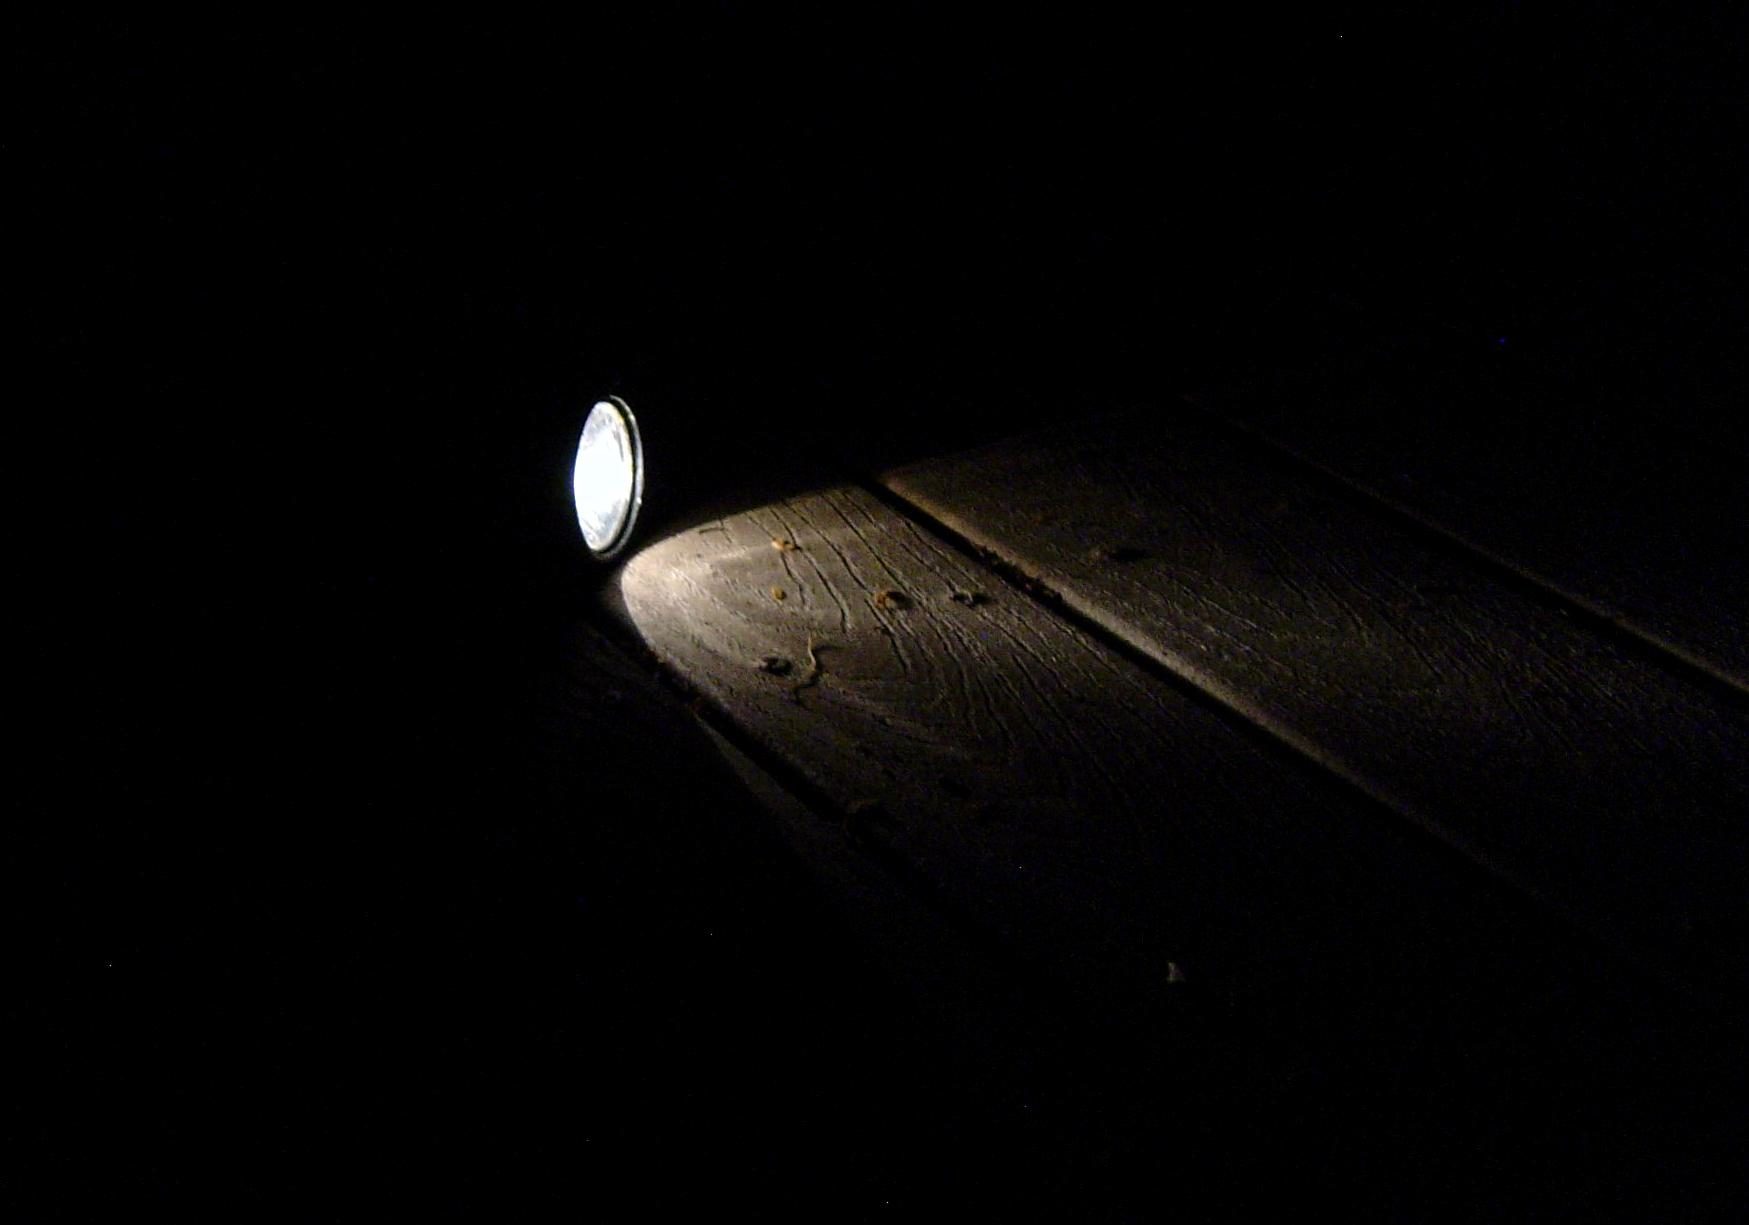 An image of a flashlight shining in a dark room.